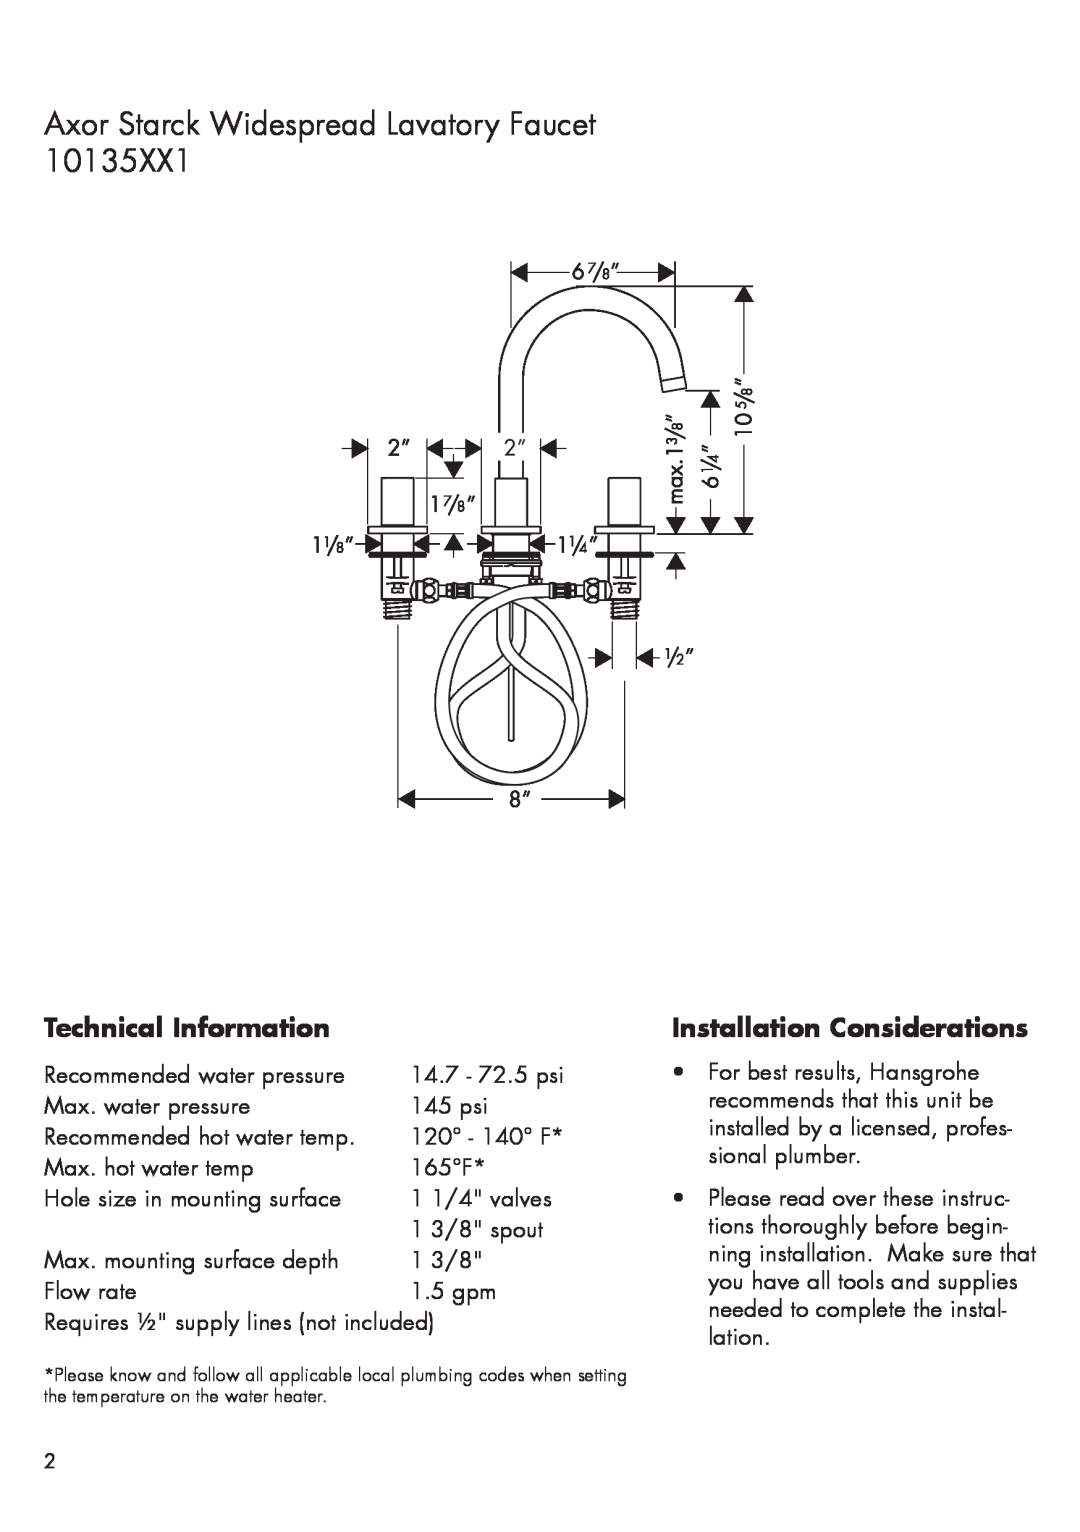 Axor 10135XX1 Technical Information, Installation Considerations, Axor Starck Widespread Lavatory Faucet 